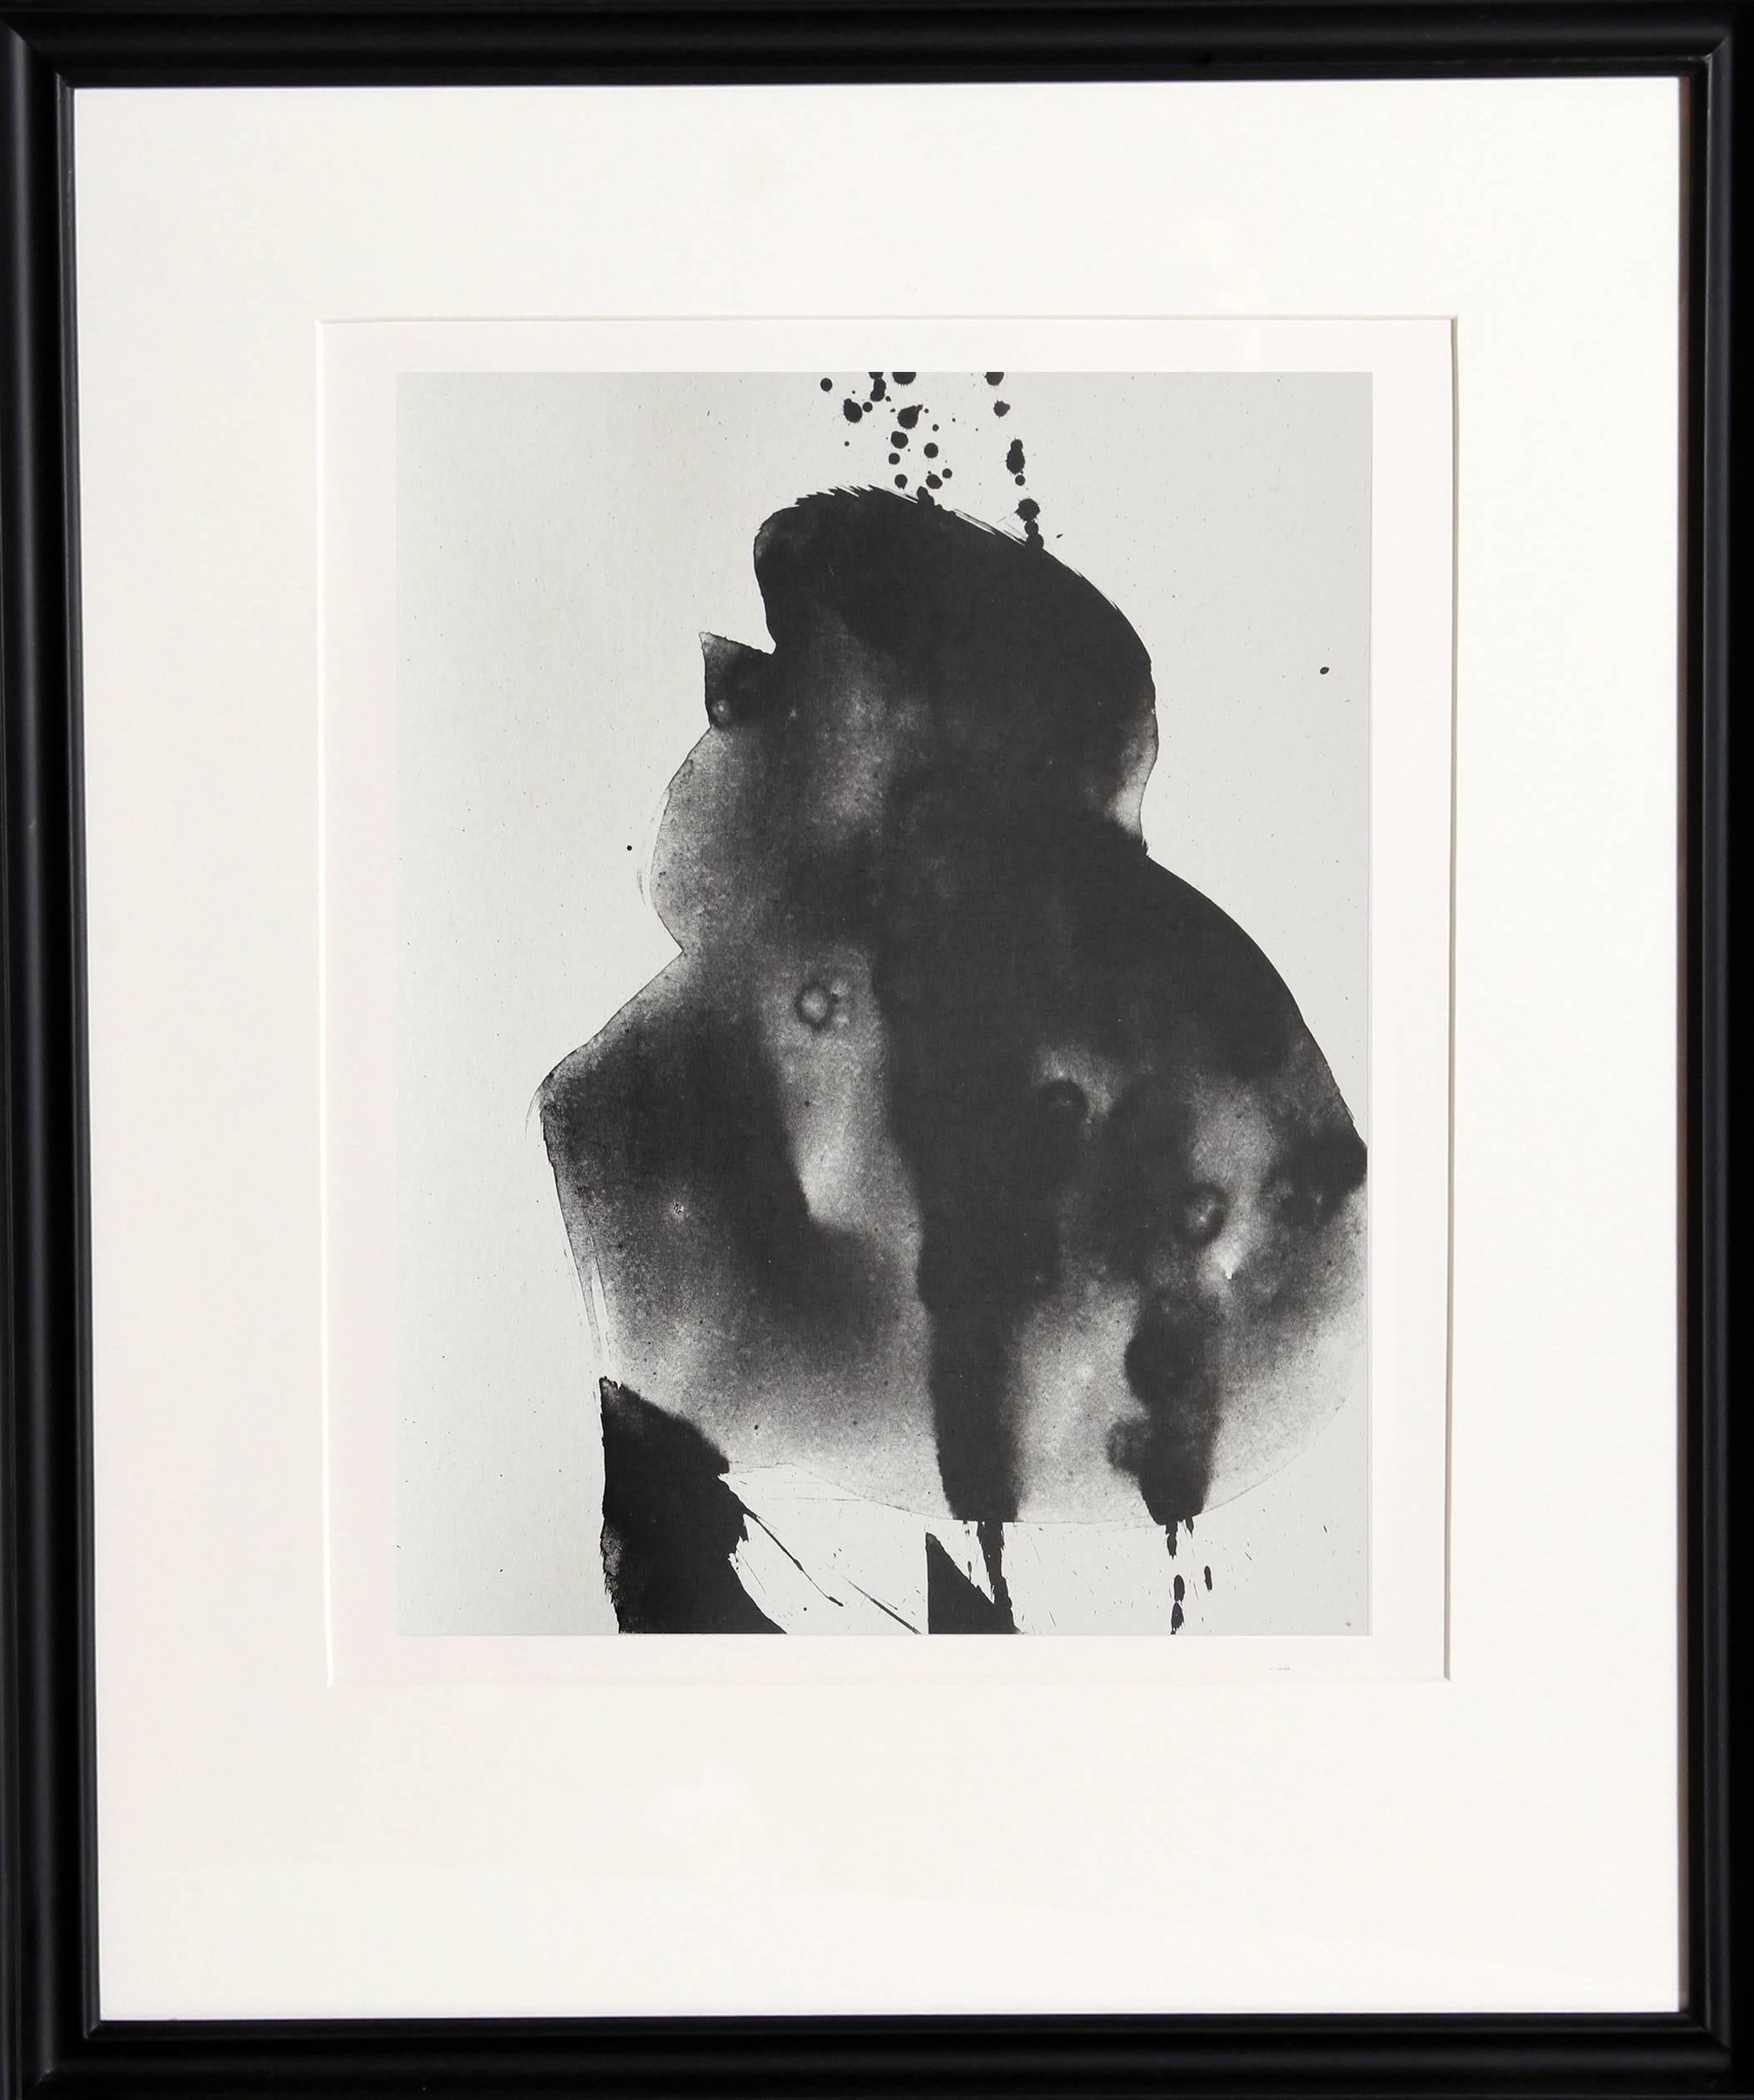 Robert Motherwell Abstract Print - Octavio Paz, Three Poems 3